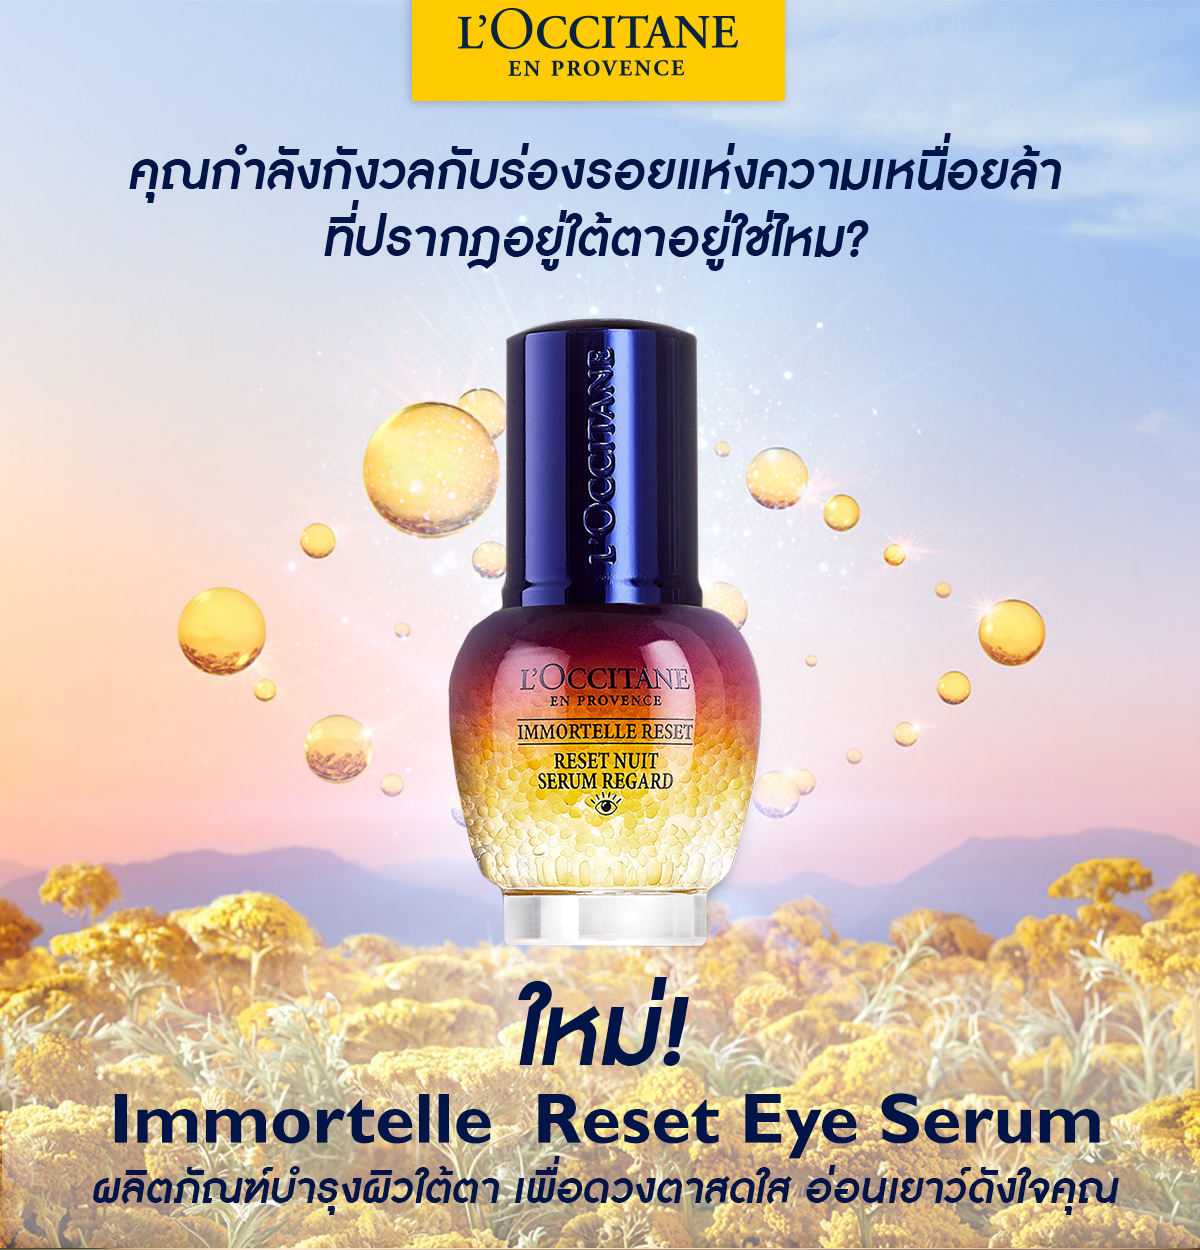 L'Occitane Immortelle Reset Eye Serum 15 ml ล็อกซิทาน  เซรั่มบำรุงผิวรอบดวงตา อิมมอคแตล รีเซ็ต 15 มล. (อายเซรั่ม, อิมมอกแตล,  ใต้ตาหมองคล้ำ) | Lazada.co.th